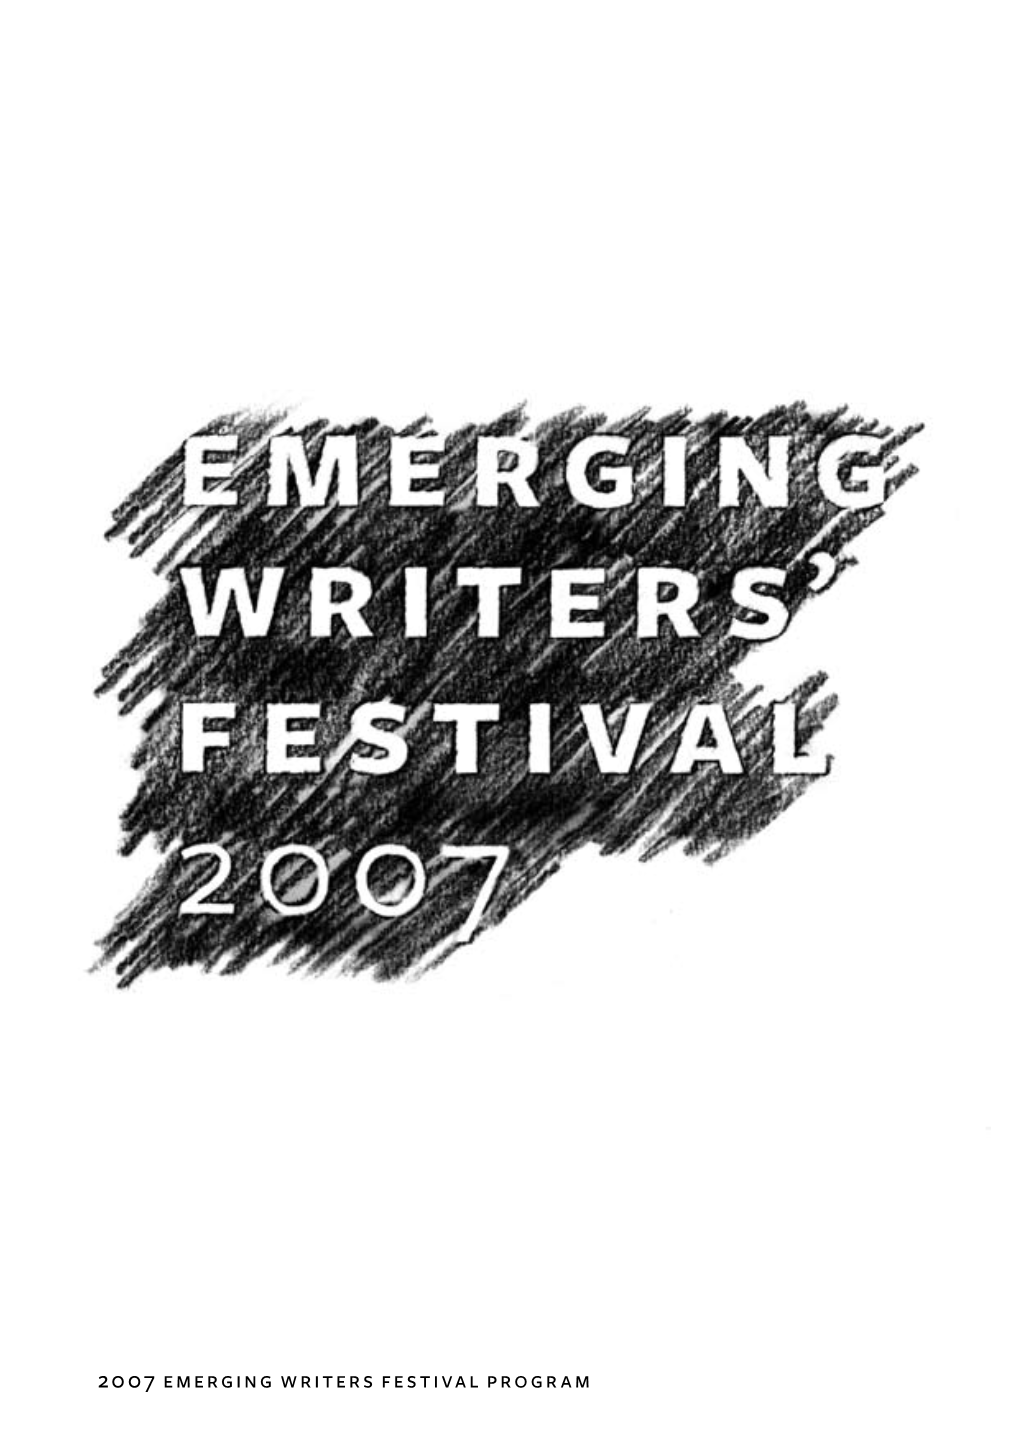 2007 Emerging Writers Festival Program Contents